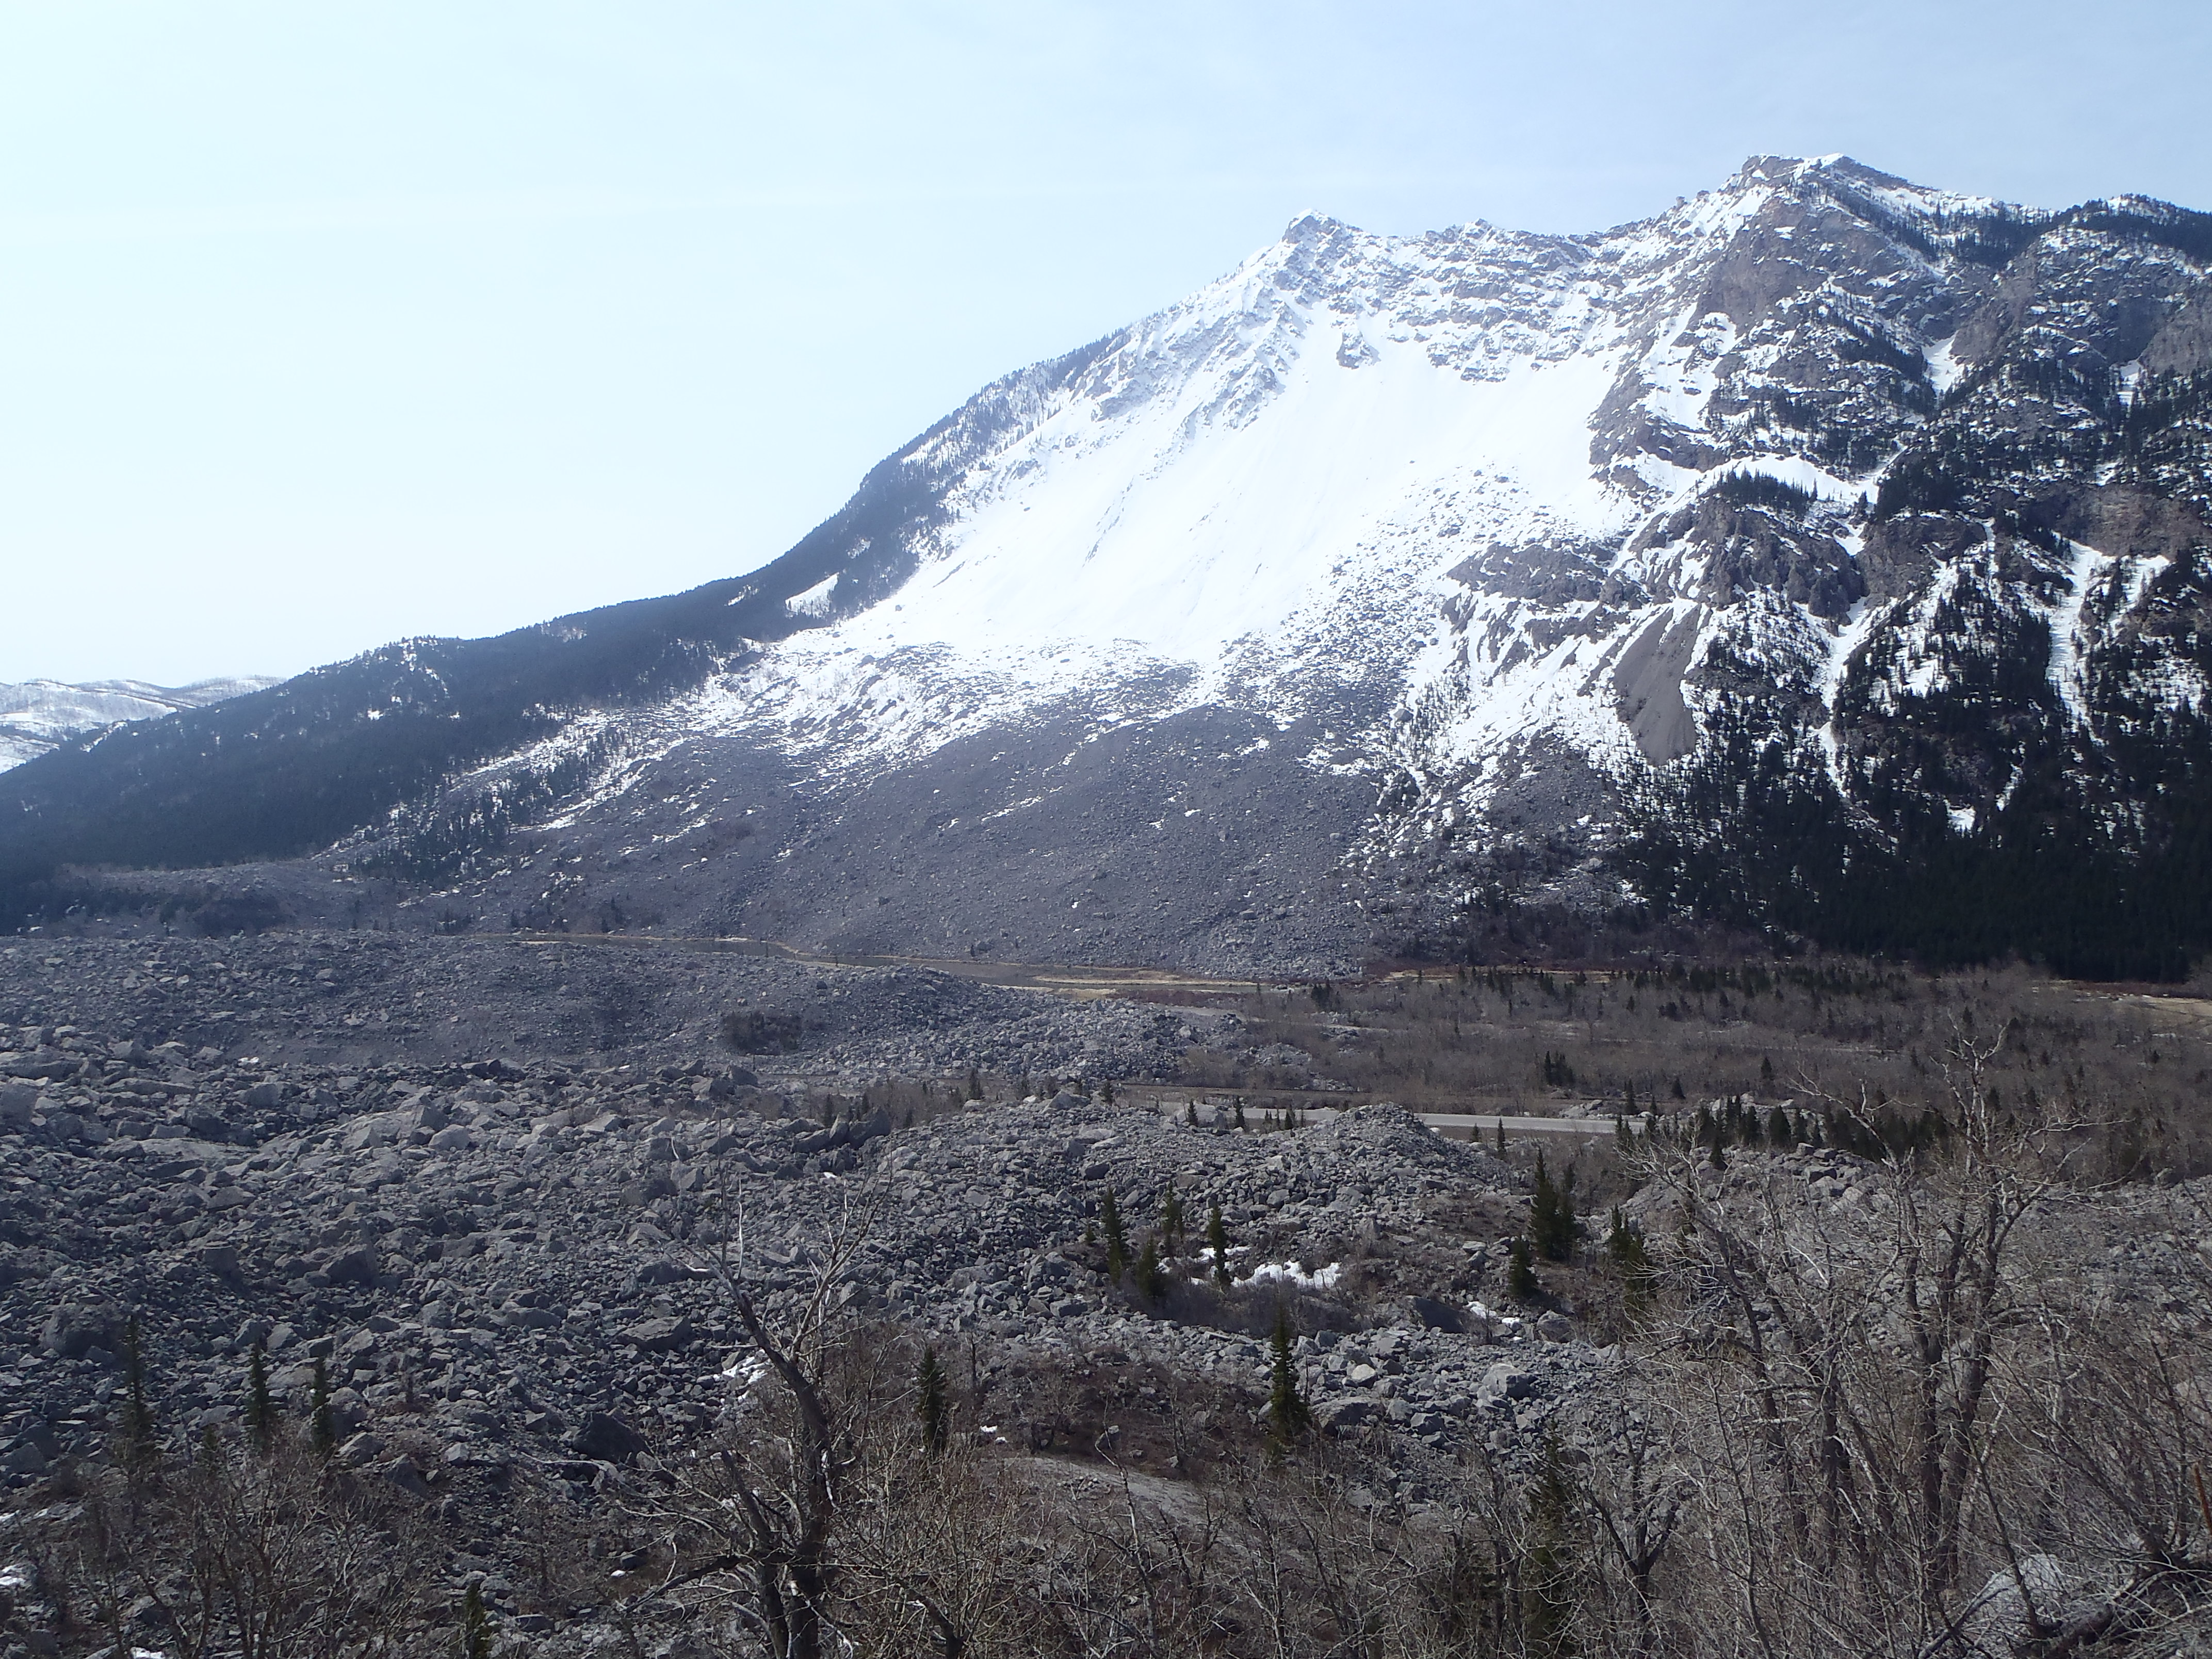 The Frank Landslide in Southwestern Alberta, Canada